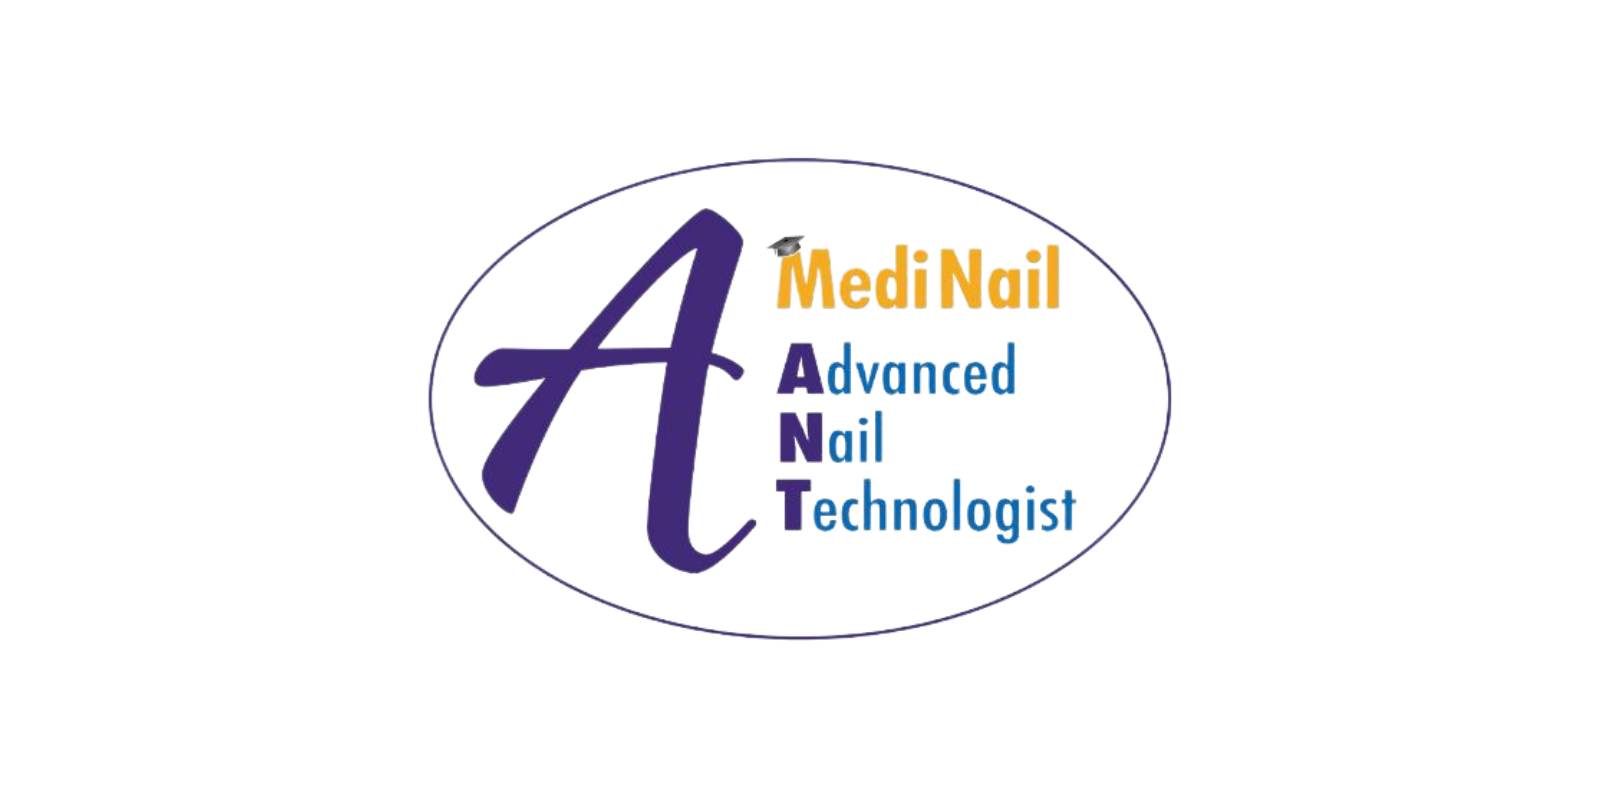 Enroll in the MediNail-Advanced Nail Technologist Program